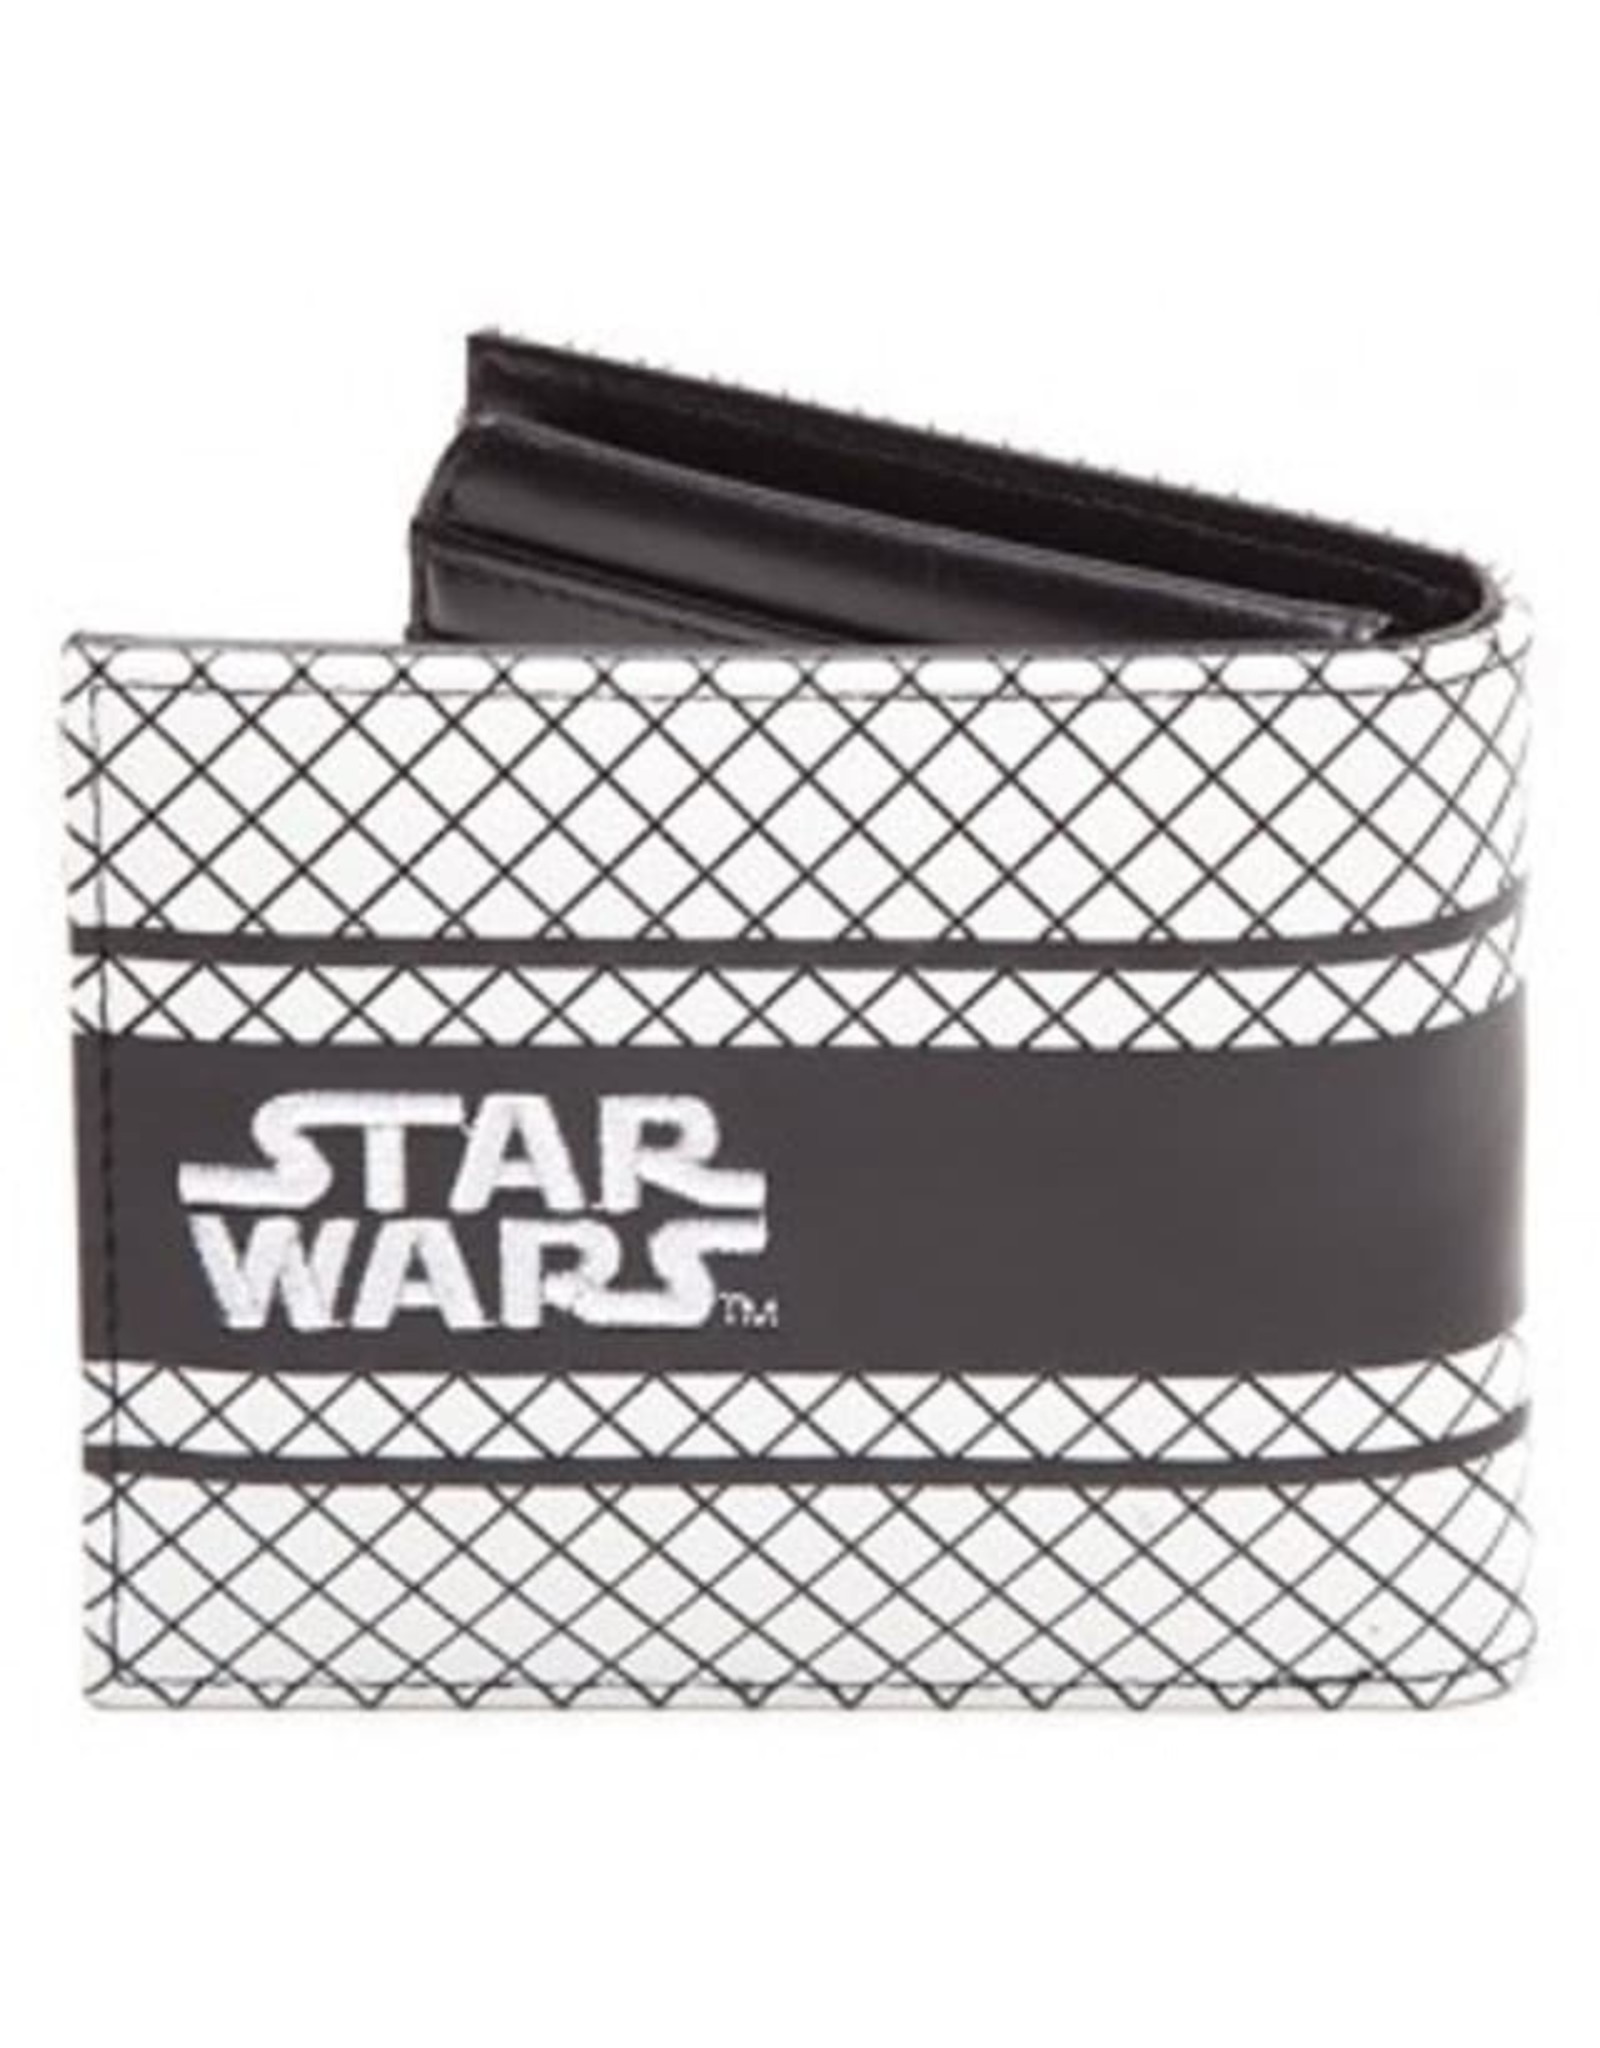 Star Wars Star Wars bags - Star Wars Empire wallet